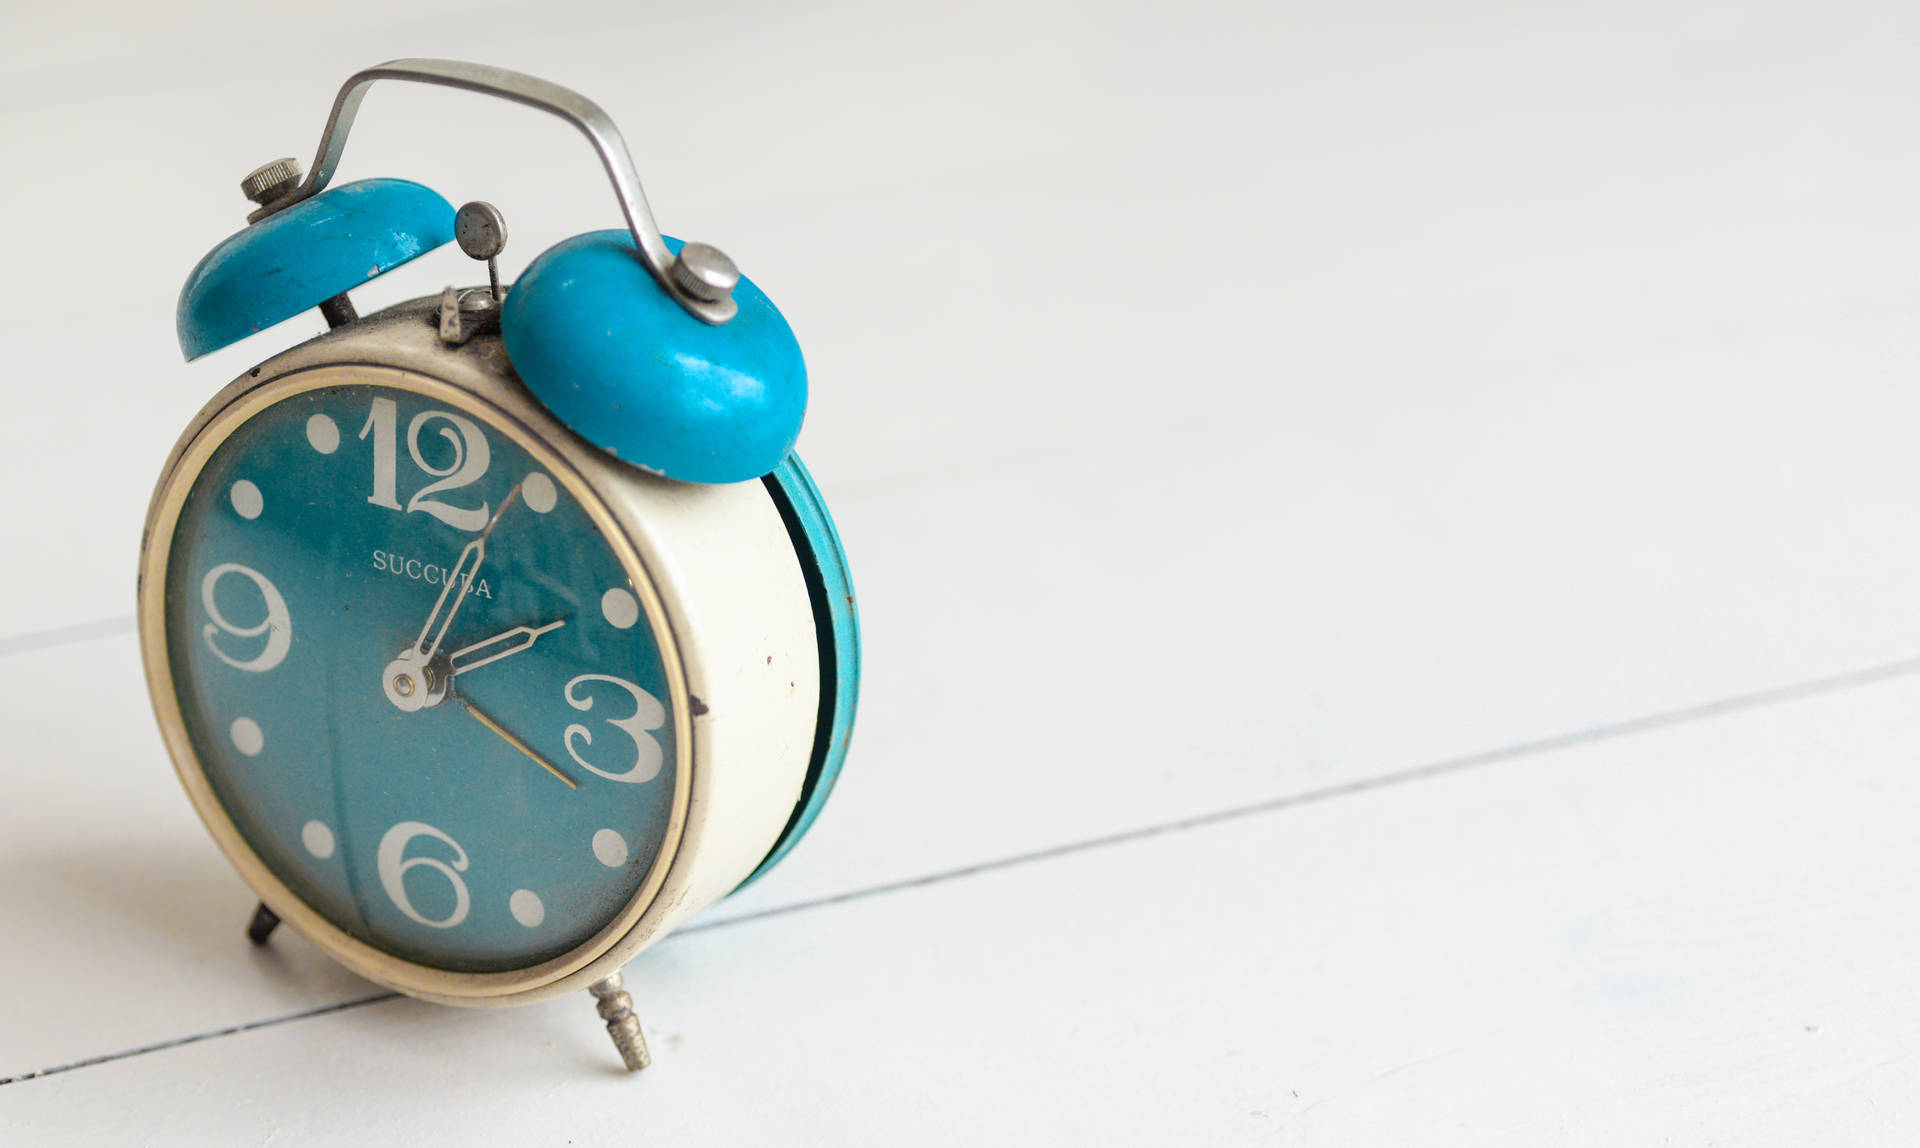 Vintage Blue Alarm Clock Wallpaper